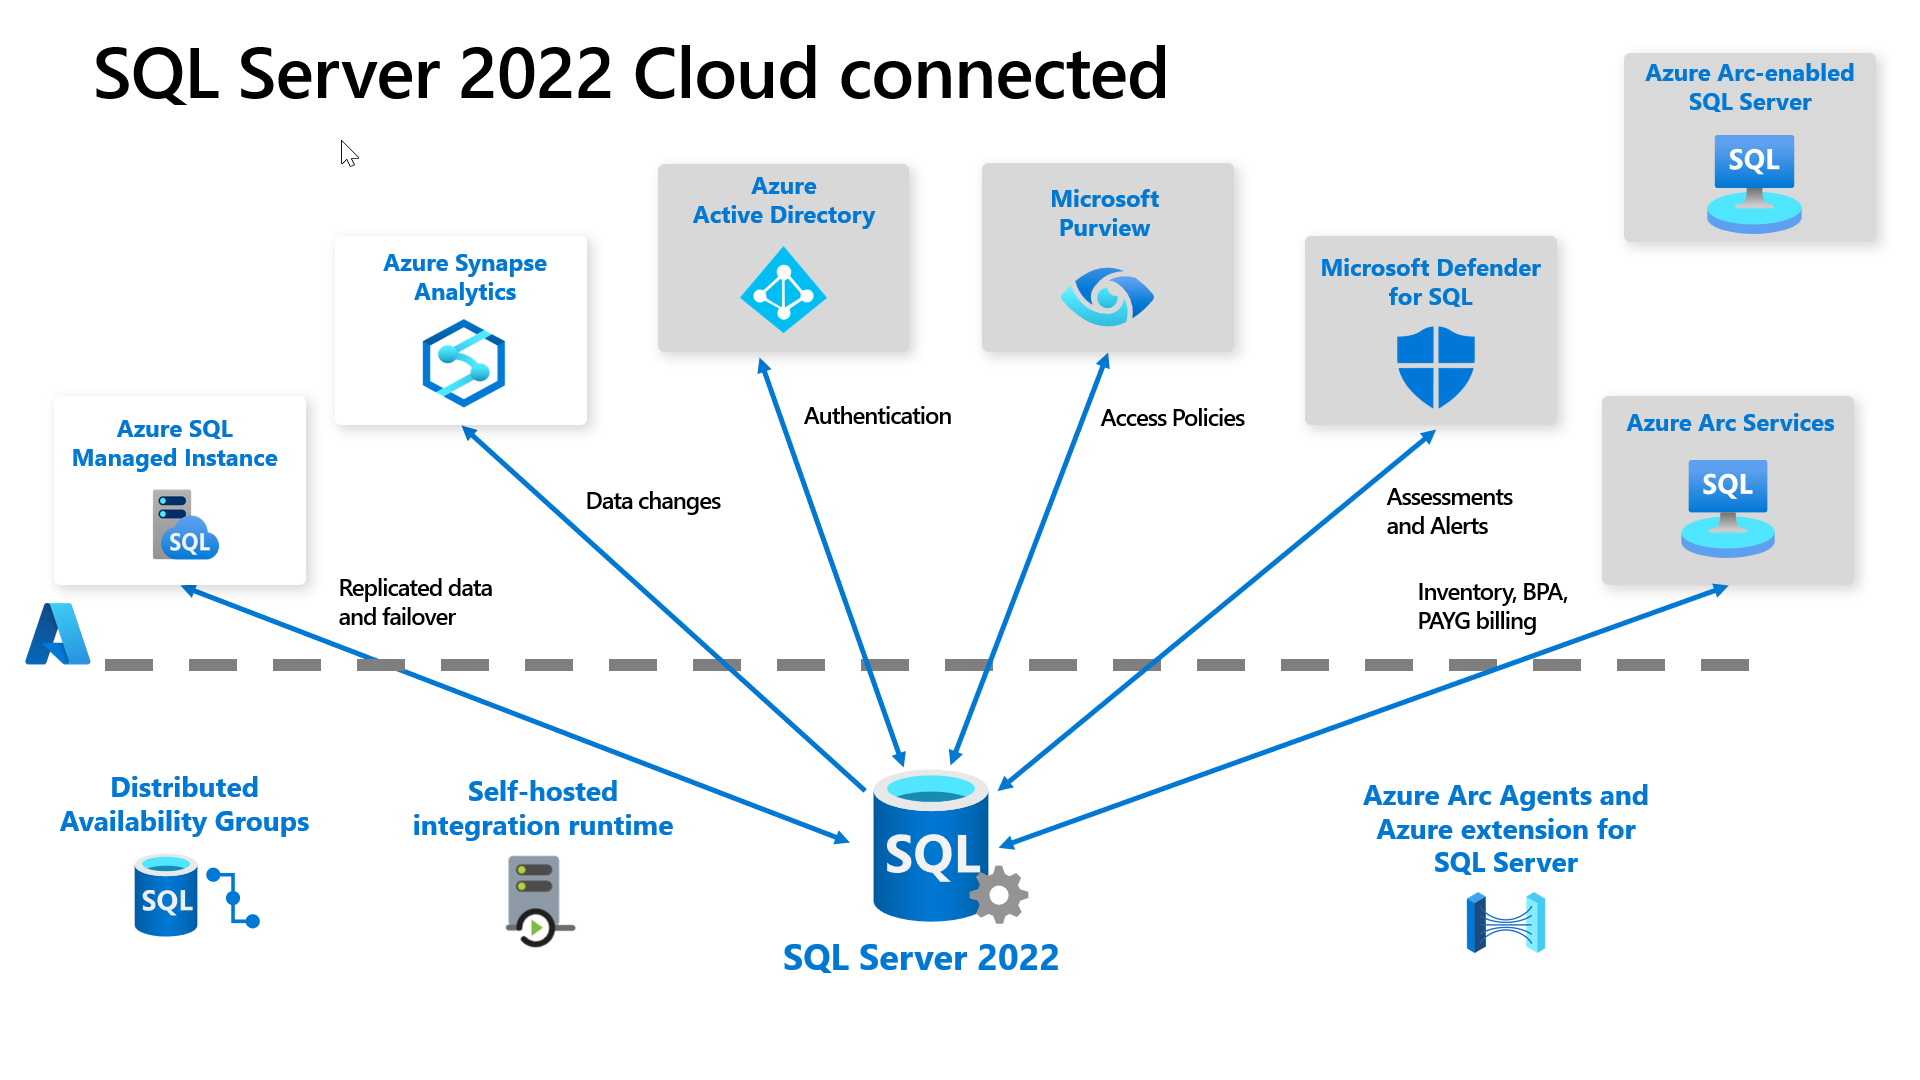 Diagram of SQL Server 2022 cloud connected capabilities.